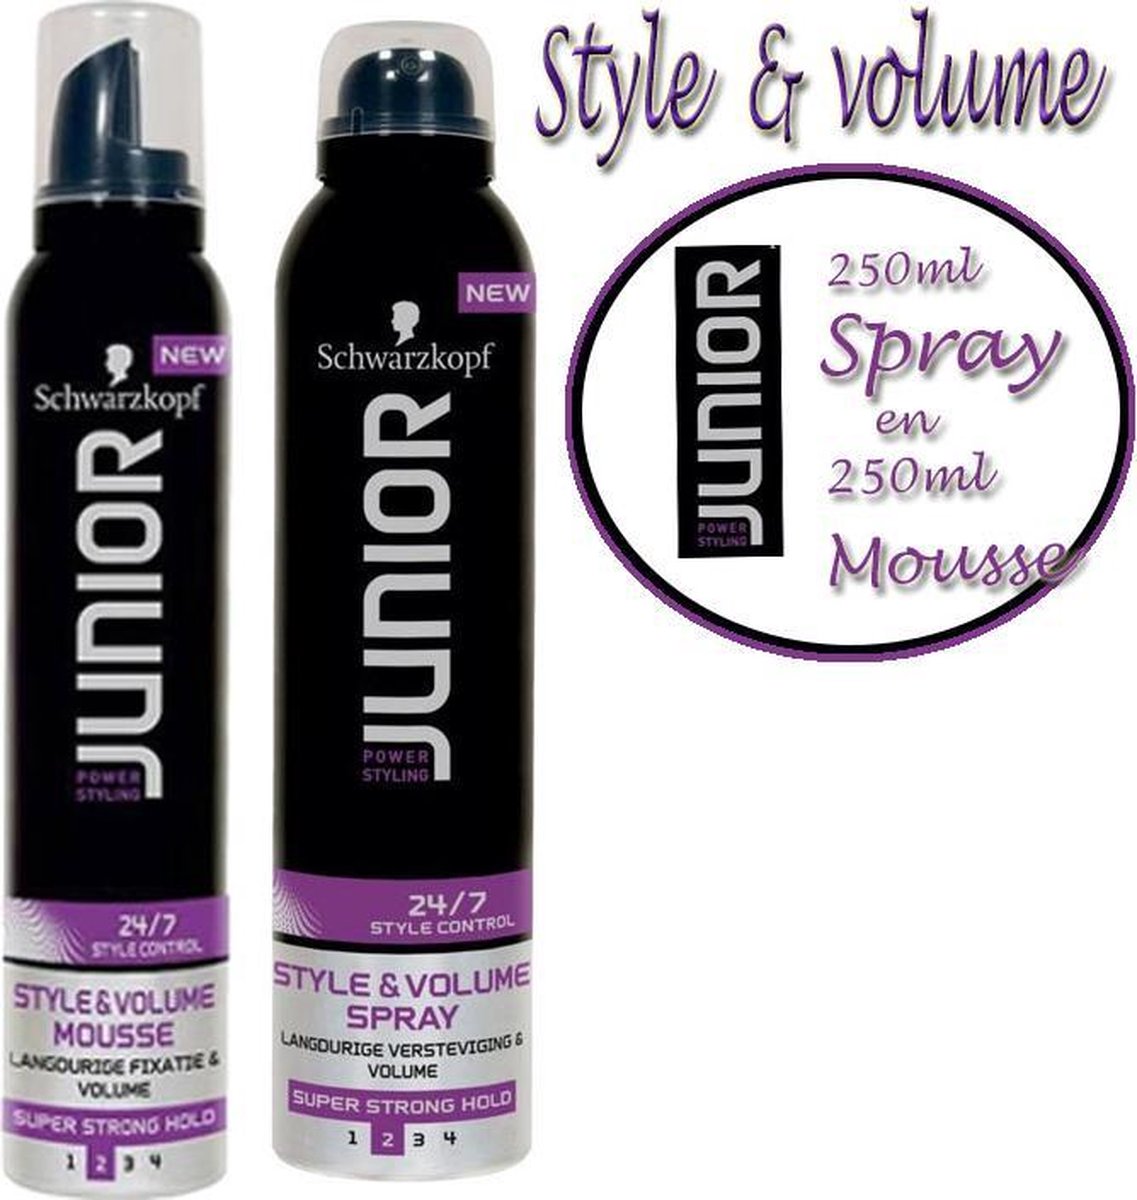 Duo pakket: Junior power Style & volume- Mousse 250ml - 2stuks